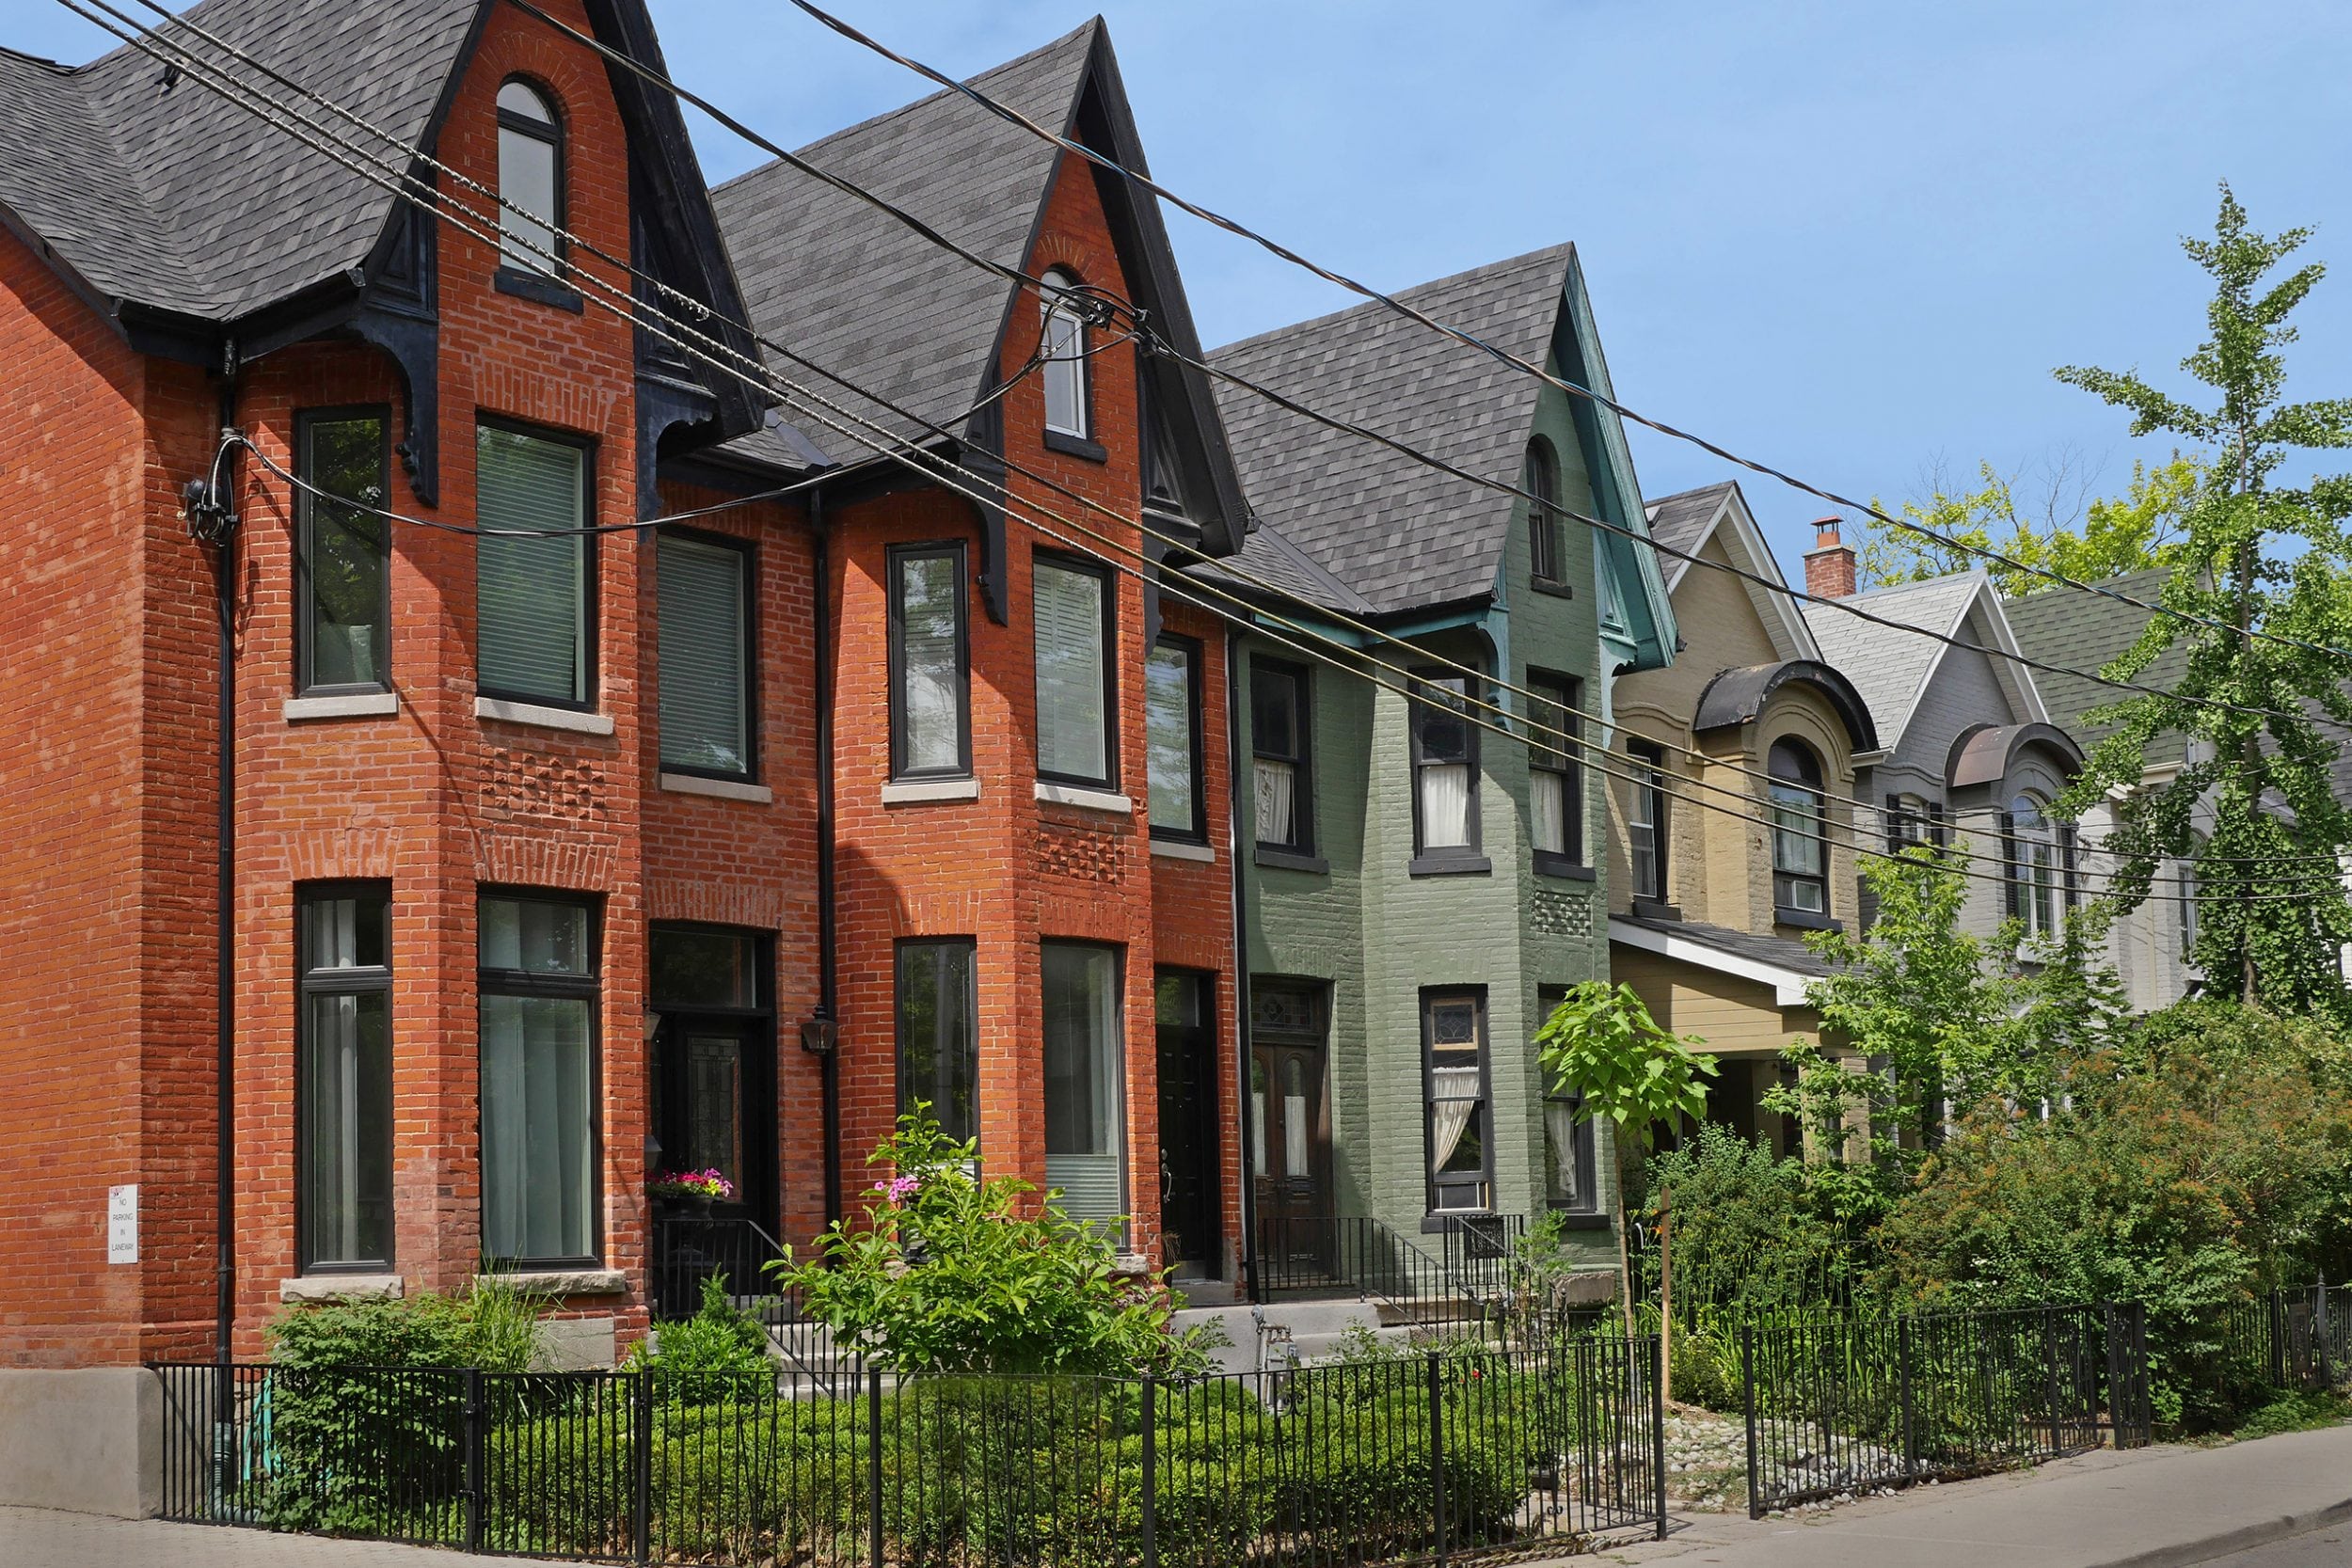 Upsizing - Consider neighbourhood